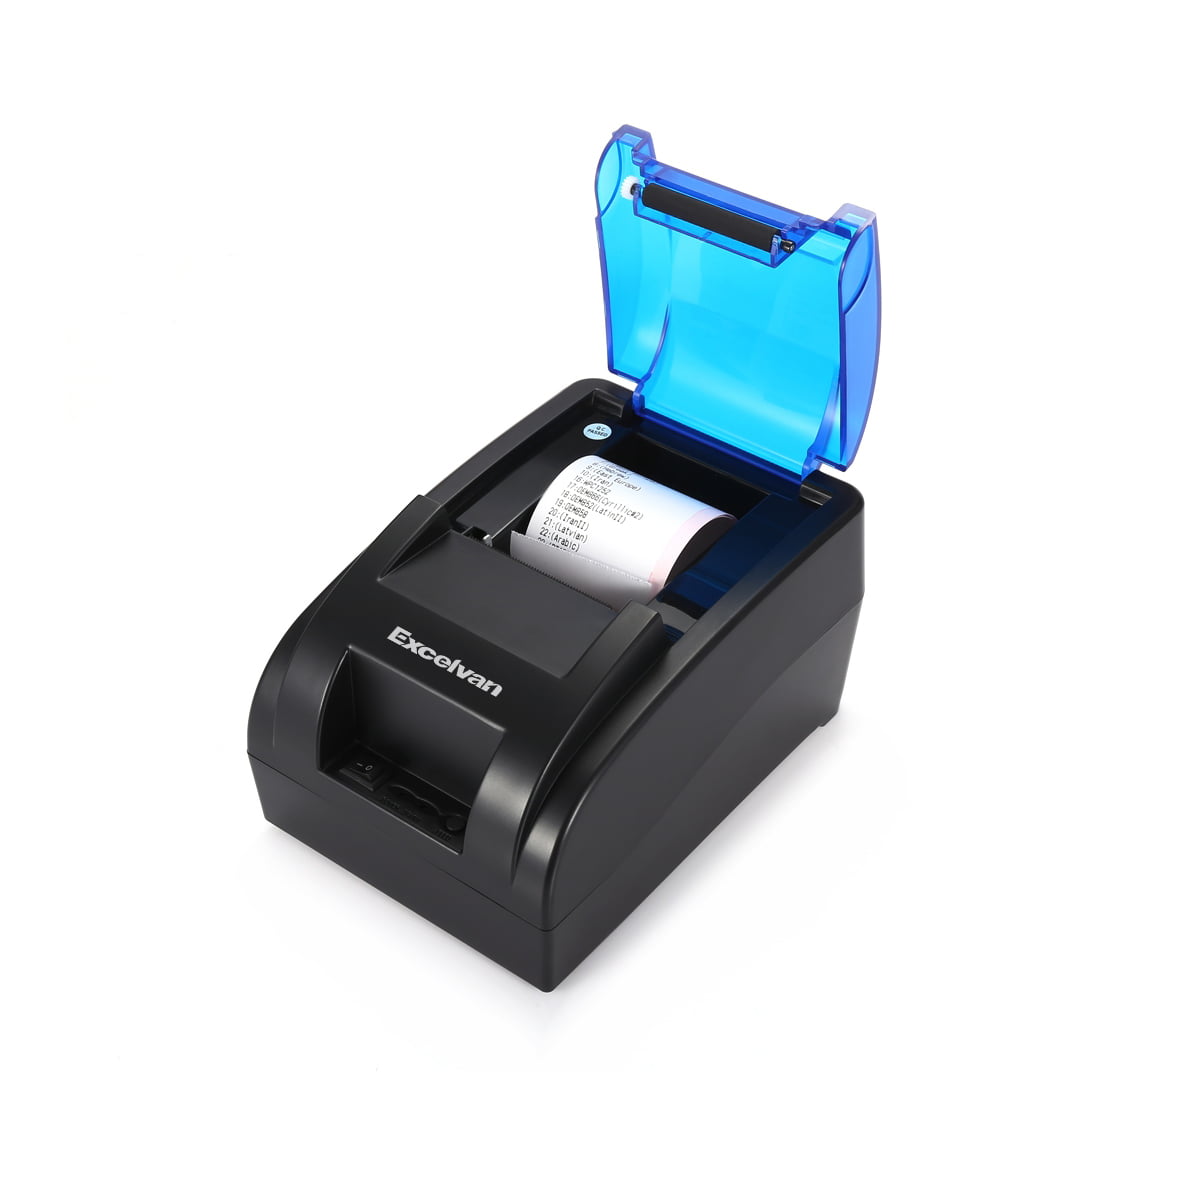 Excelvan USB Thermodrucker Dot Thermobondrucker 58mm POS Kassendrucker Printer 